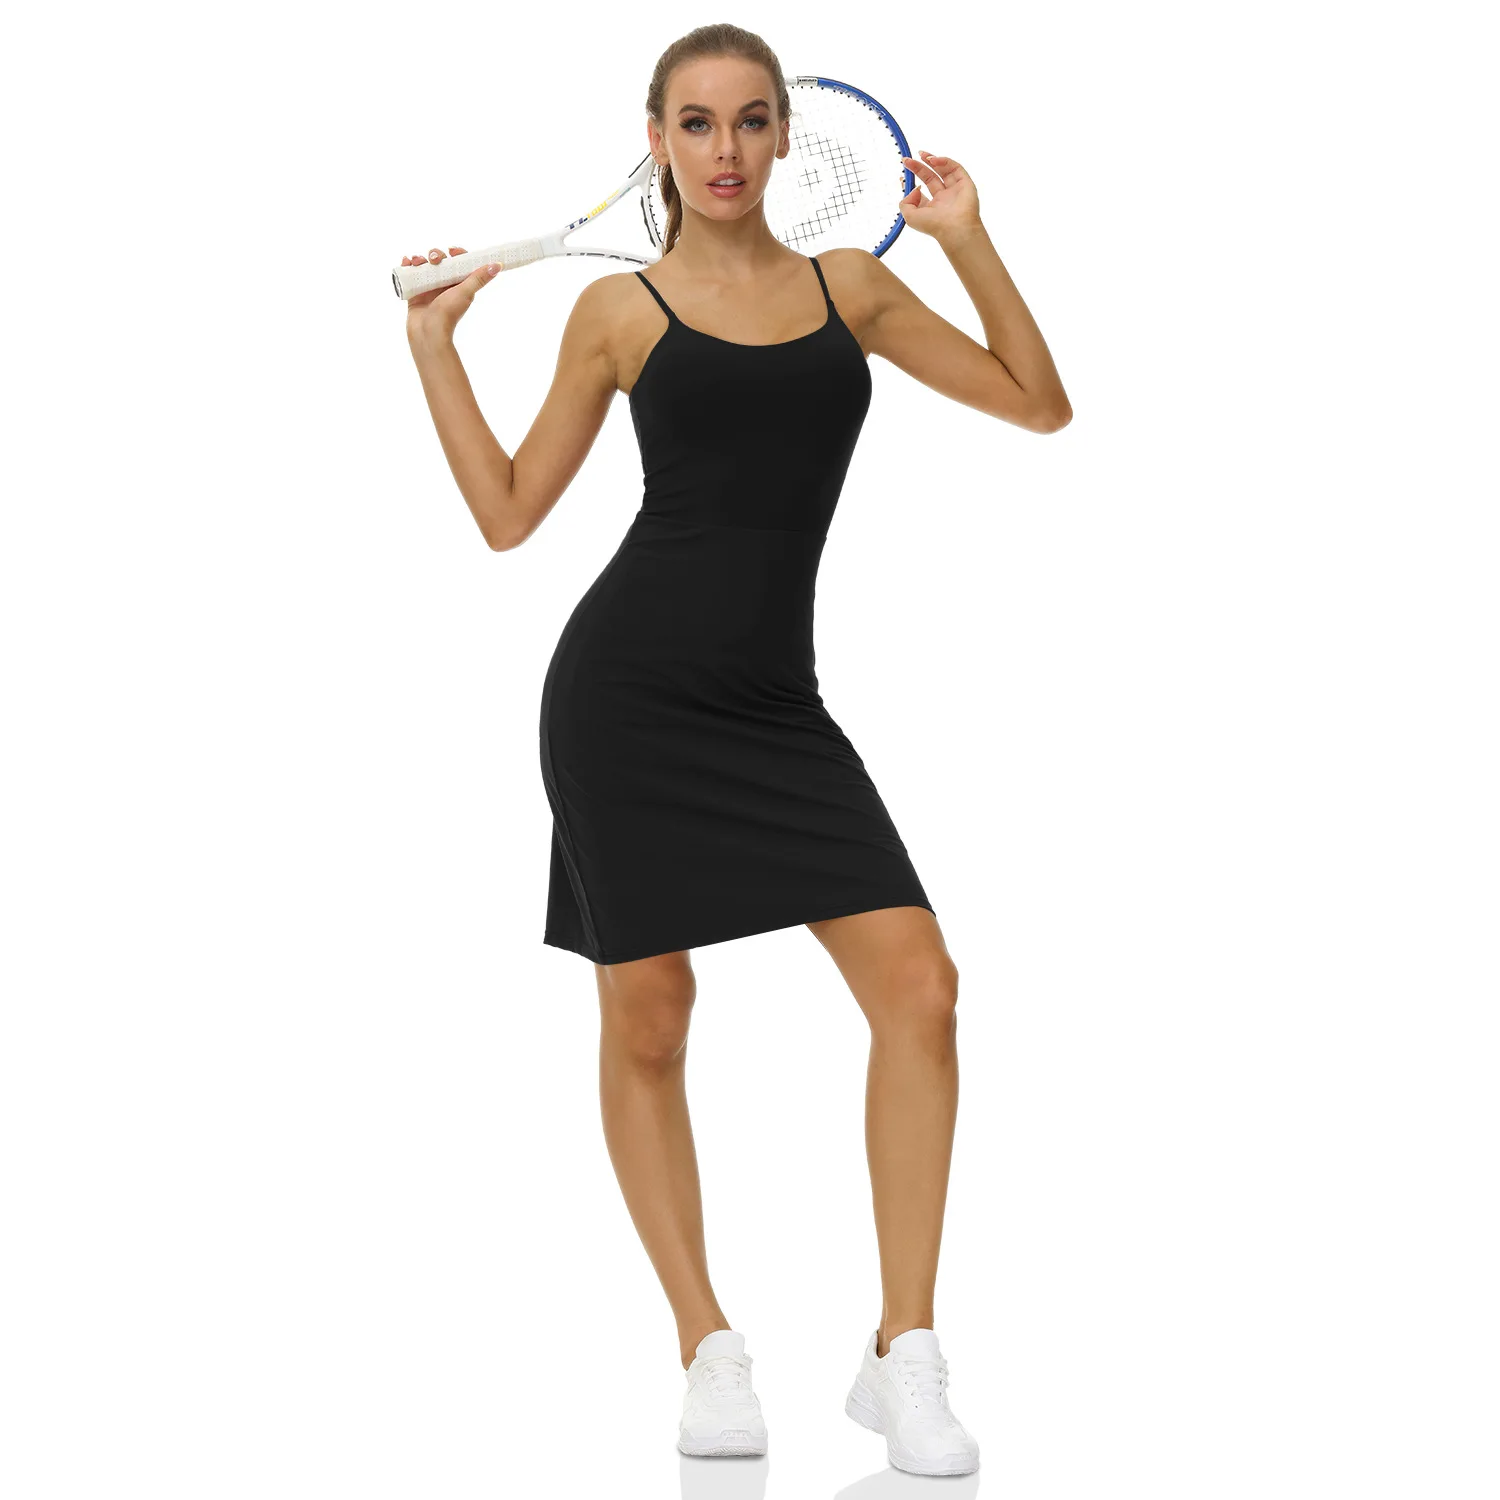 YIYINew Design Women's Tennis Dress Workout Golf Dress Built-in With Bra Shorts Pocket Sleeveless Athletic Dresses